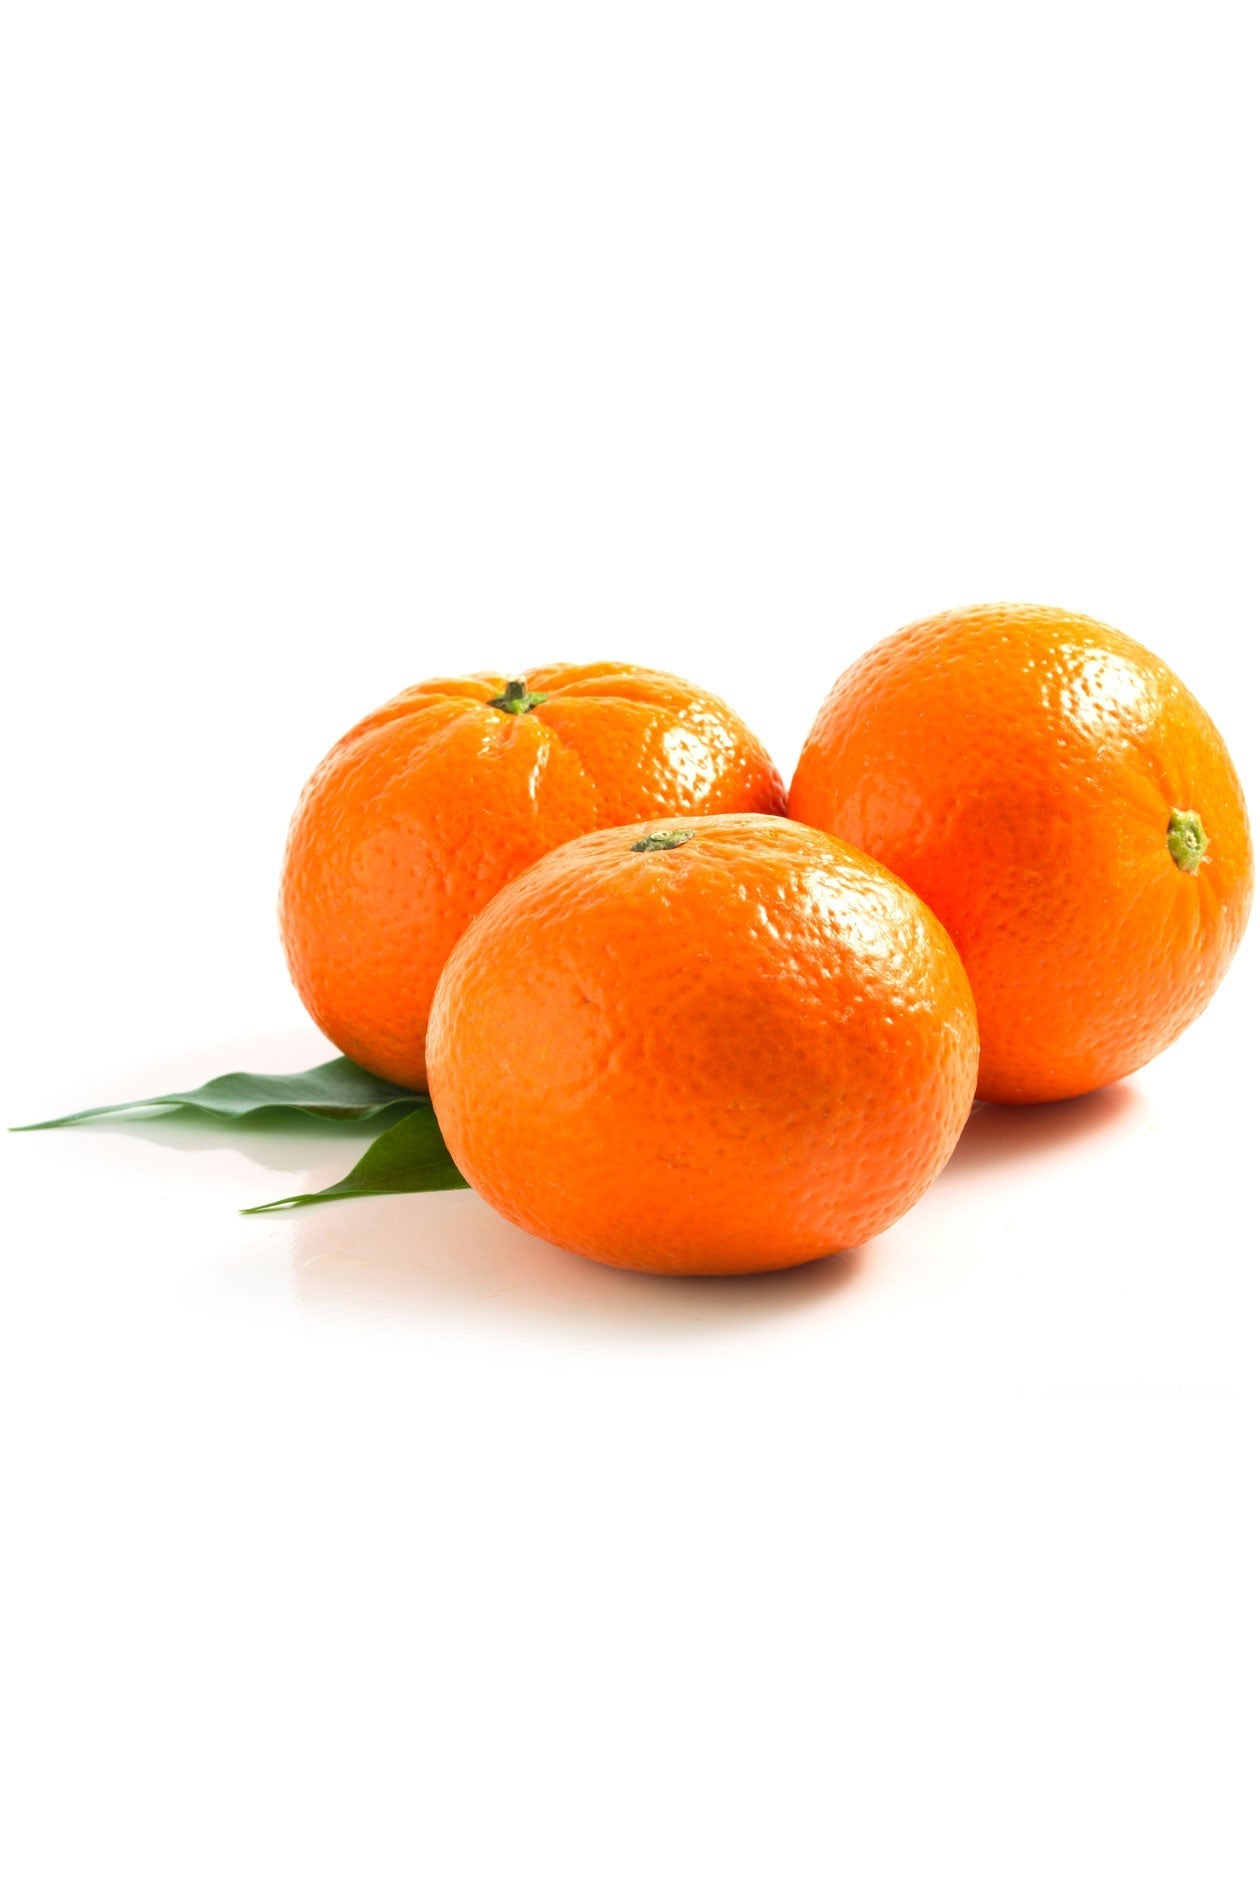 Mandarine (Tangerine) huile essentielle dōTERRA | 15 ml